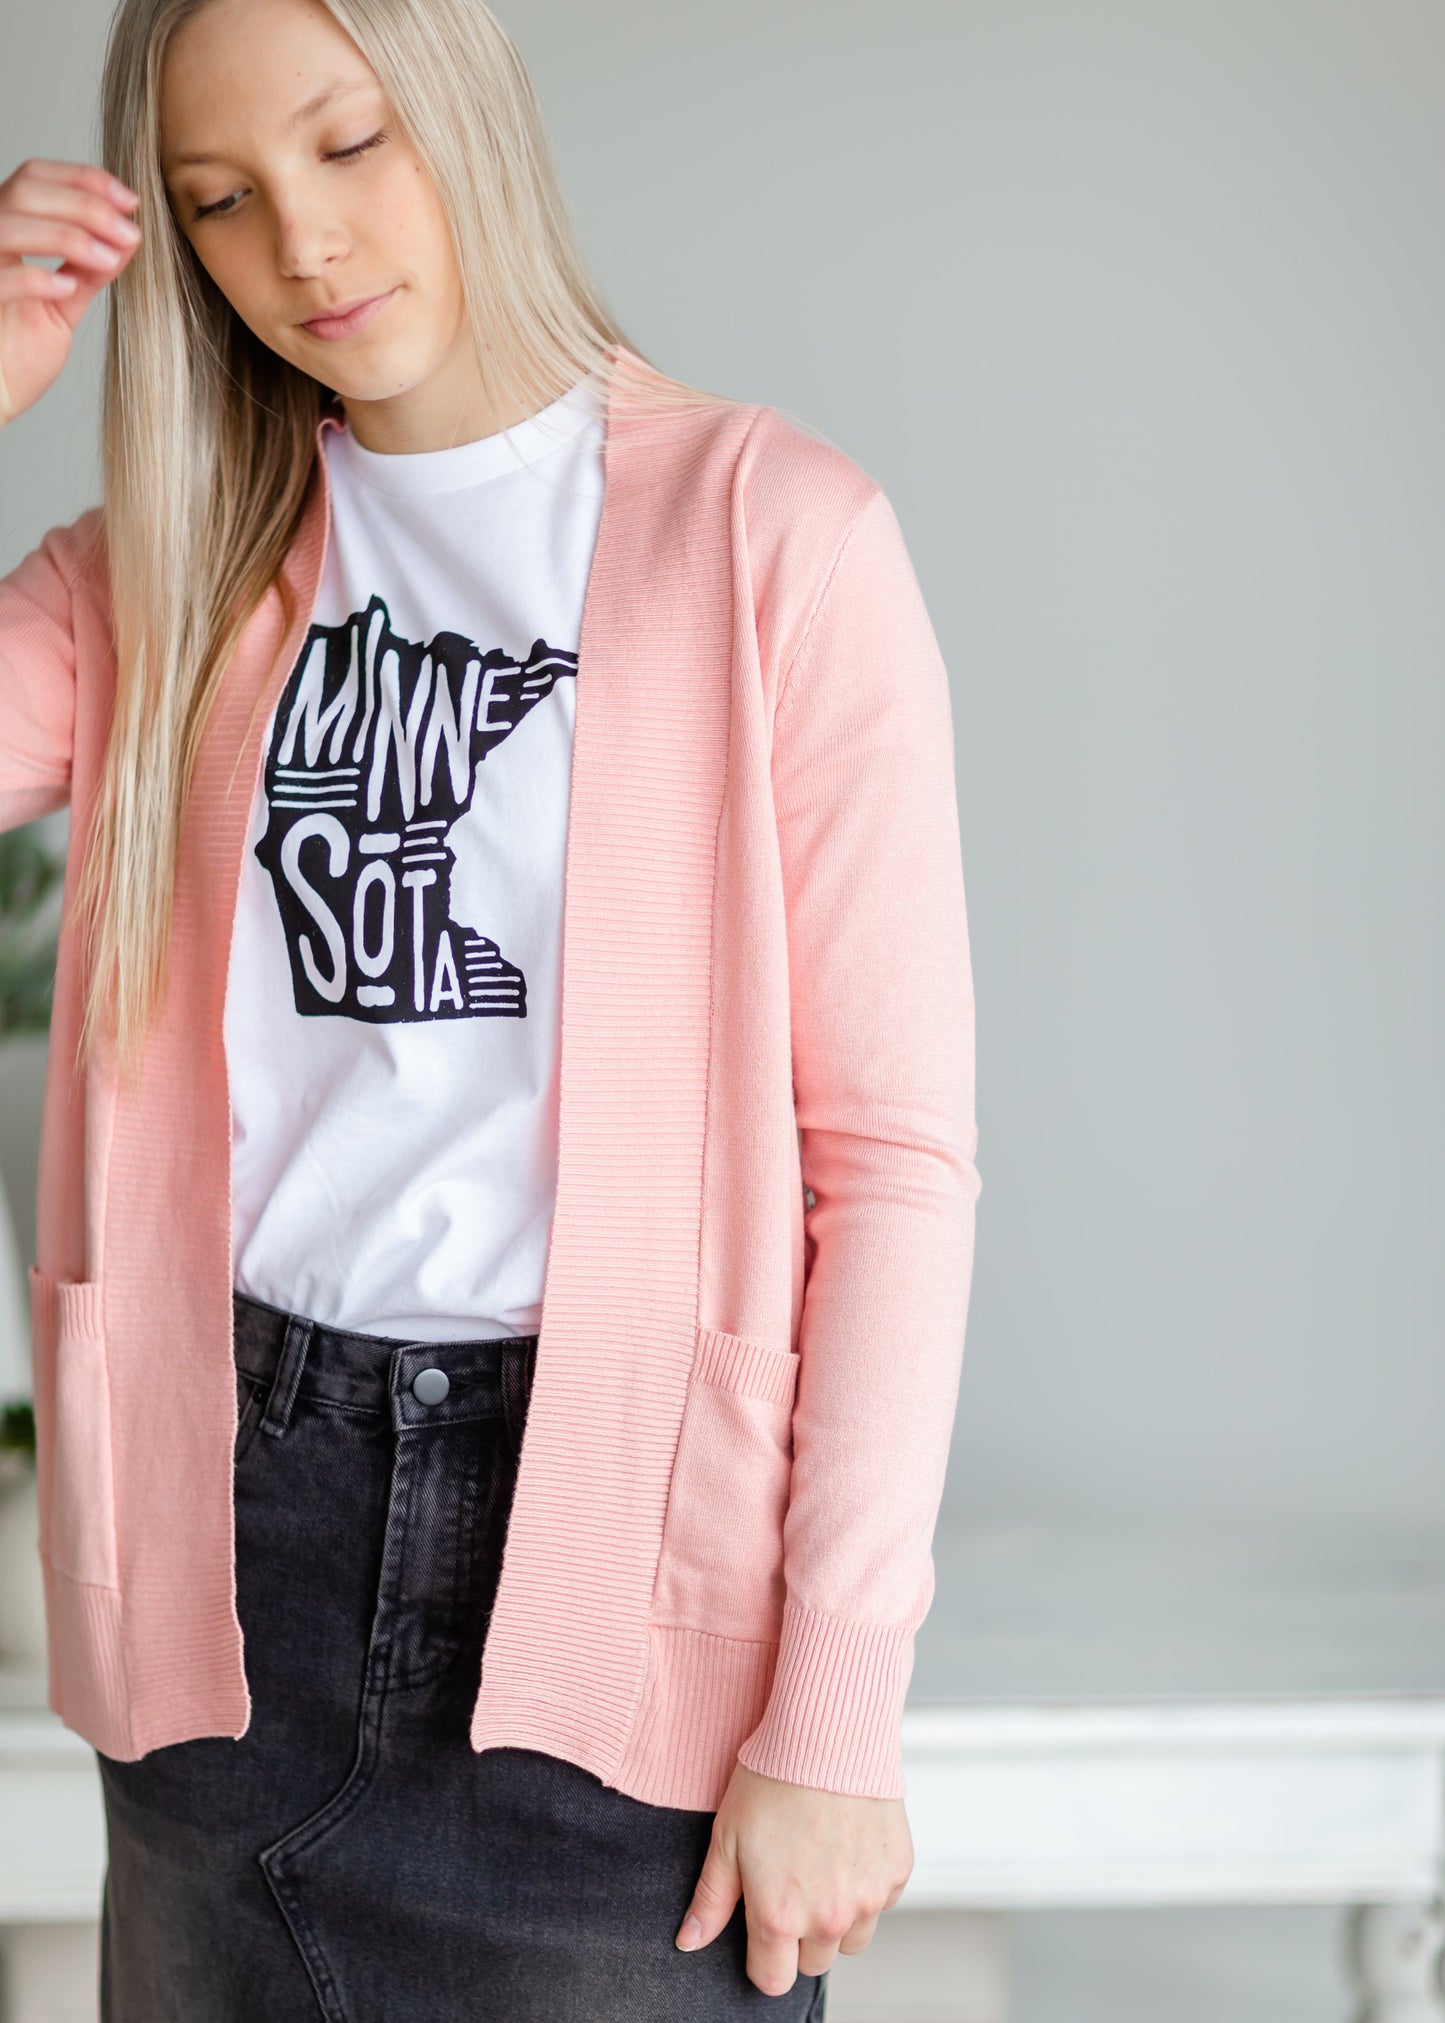 Pink Long Sleeve Sweater Cardigan Tops